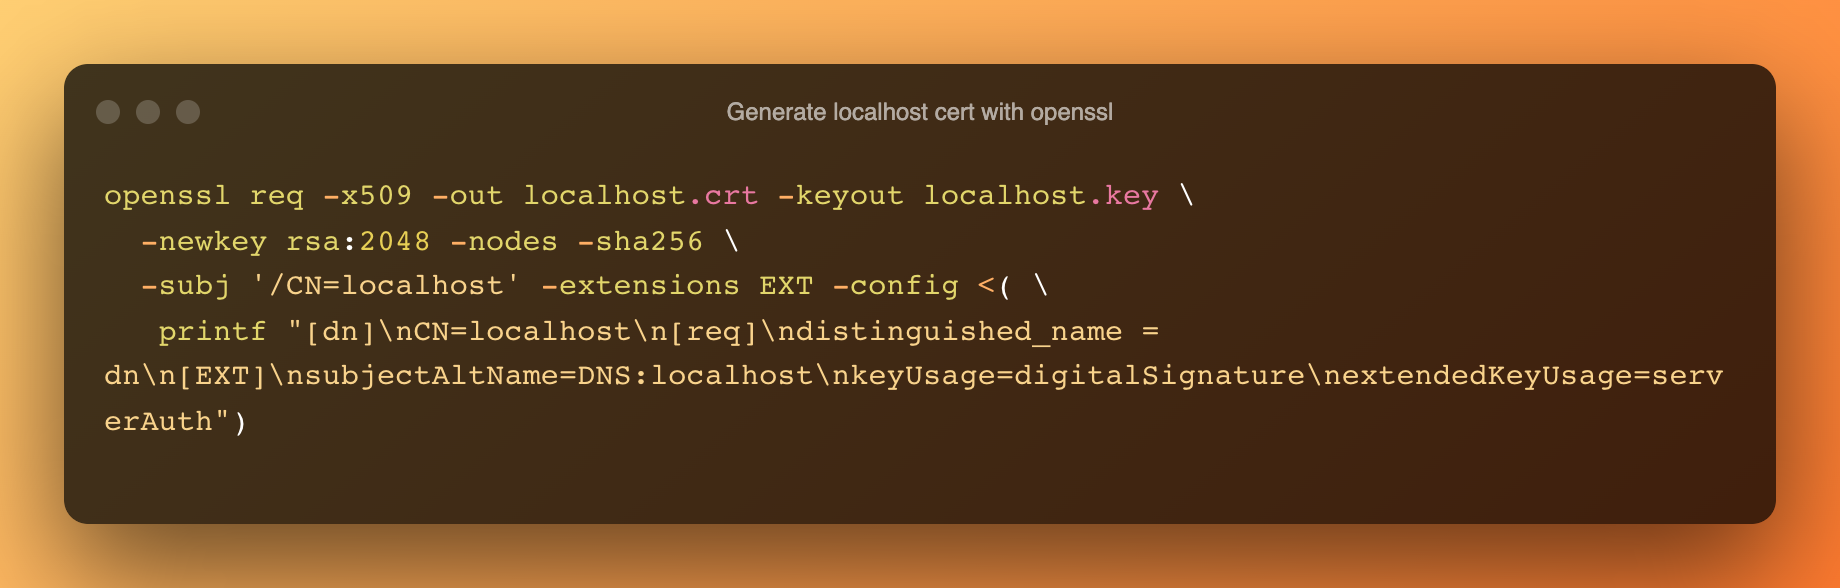 openssl certificate generation command